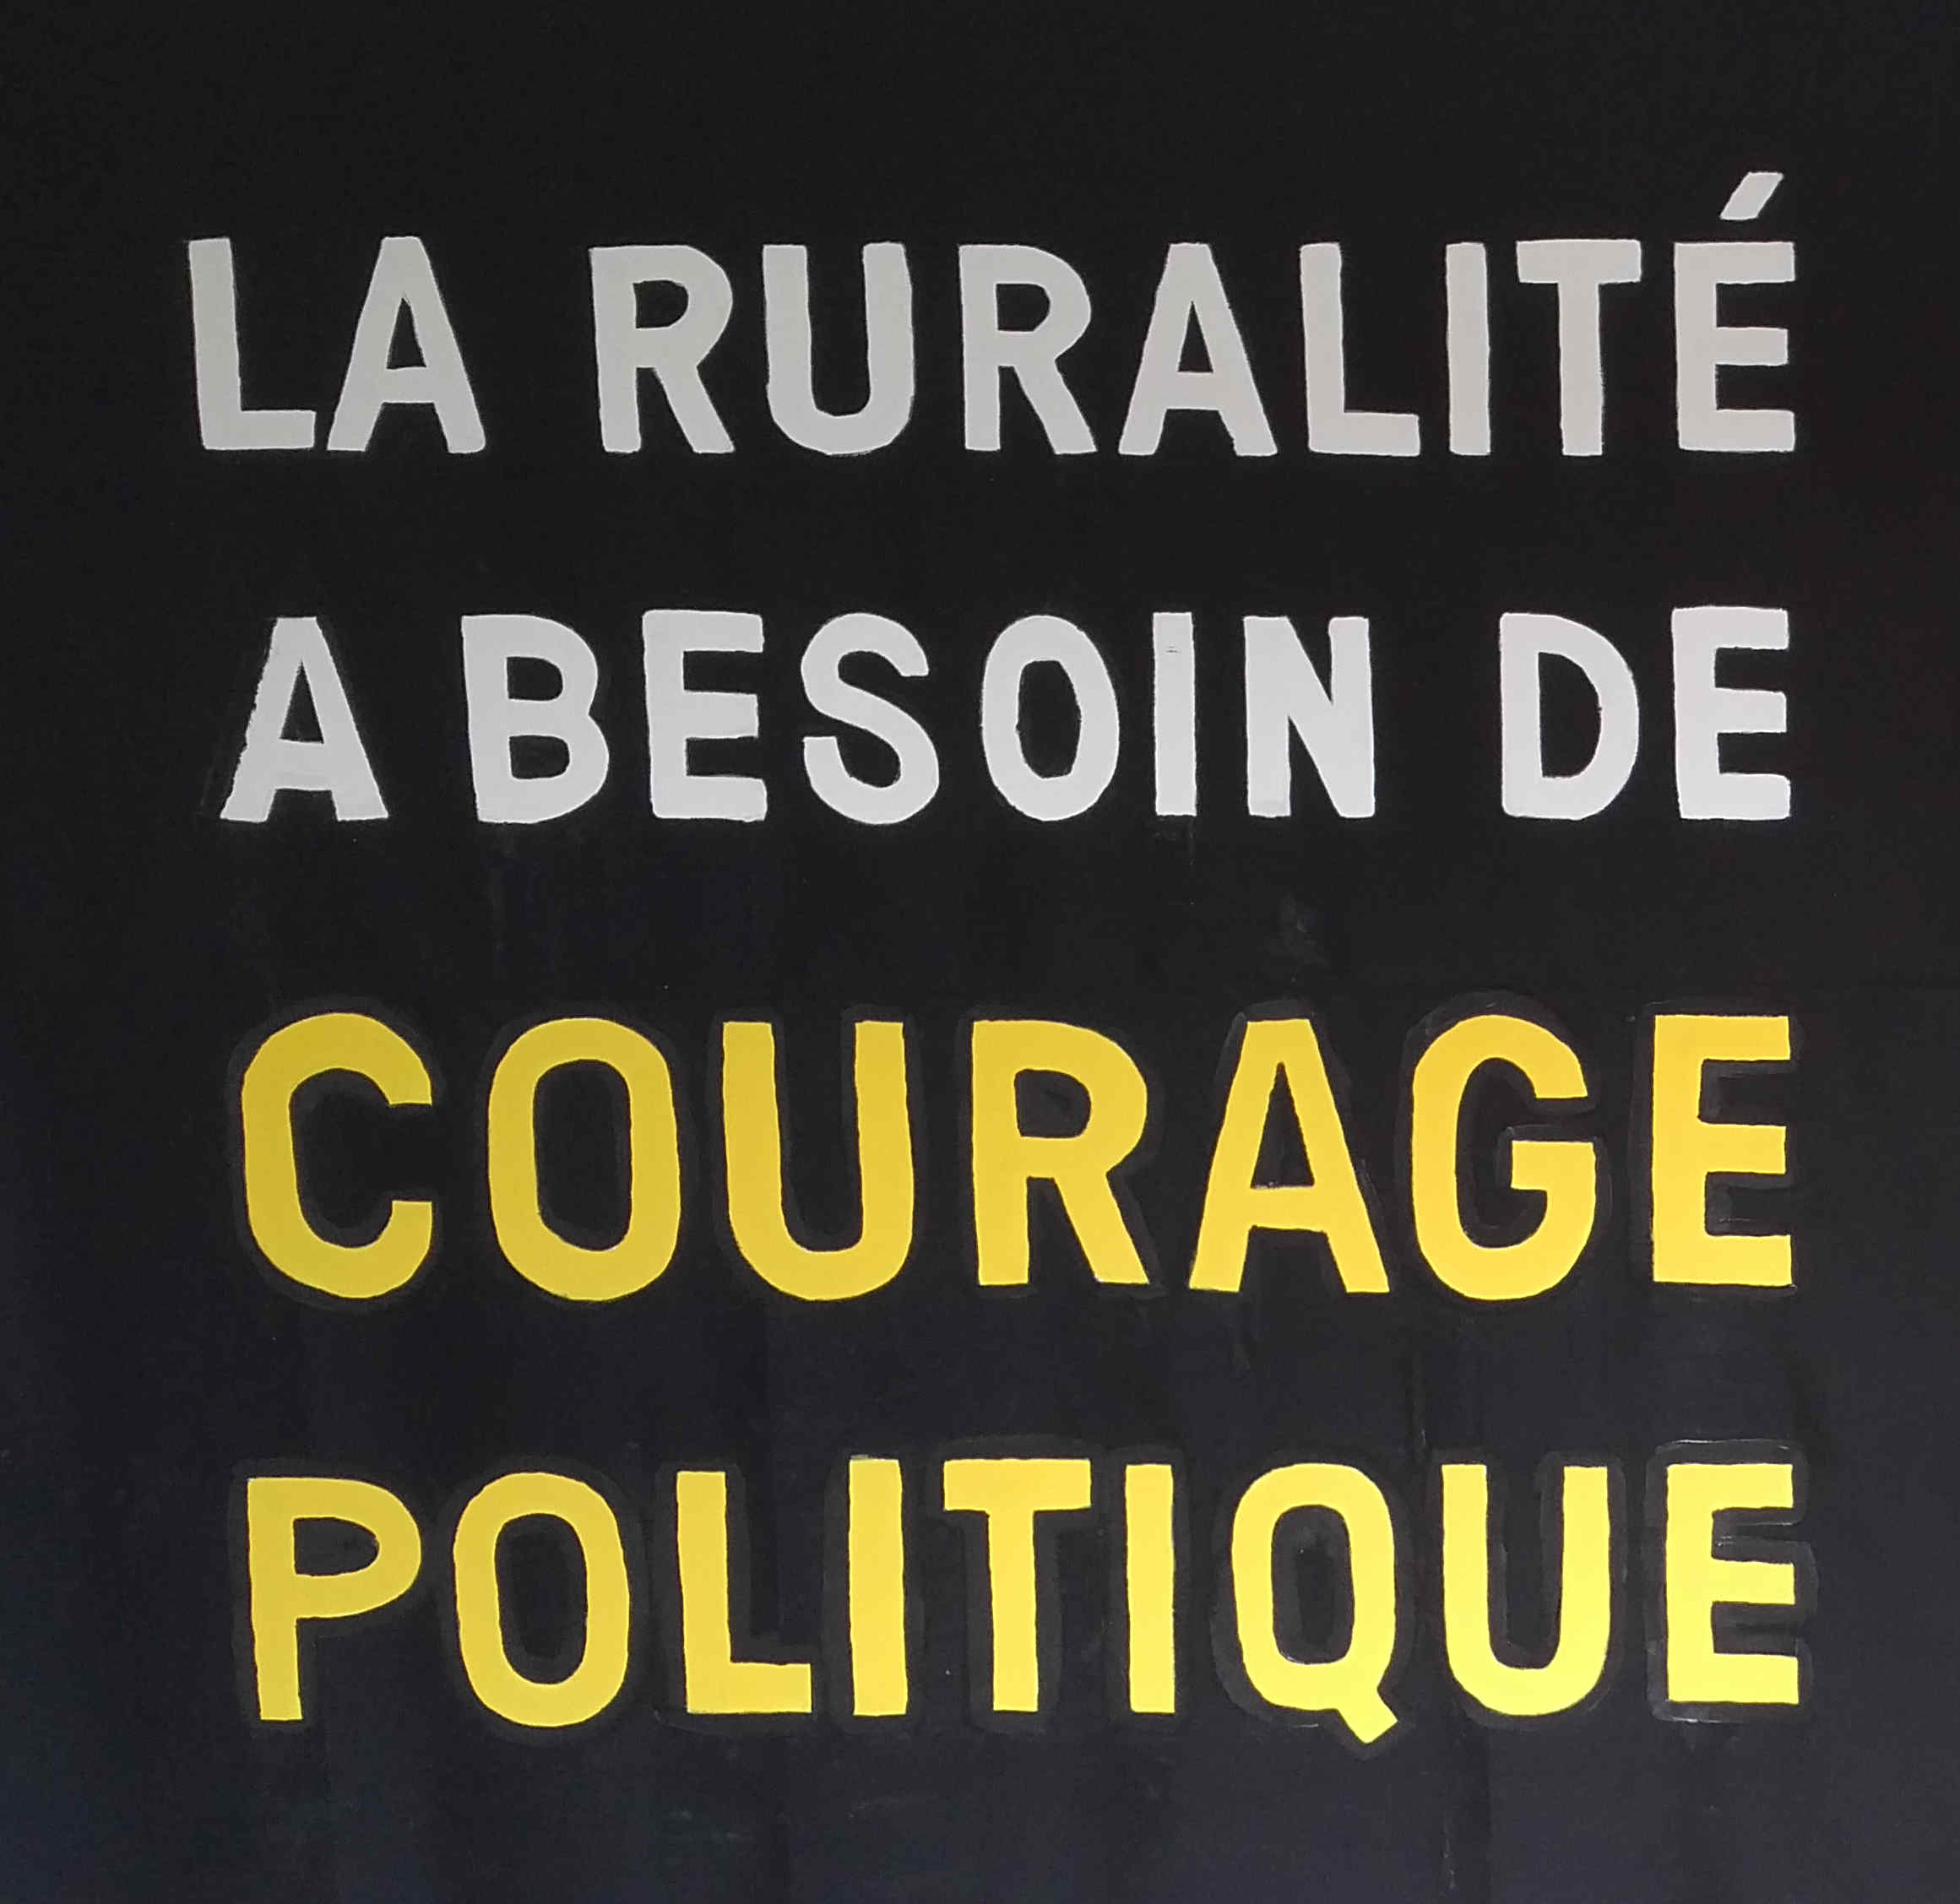 You are currently viewing La ruralité a besoin de courage politique